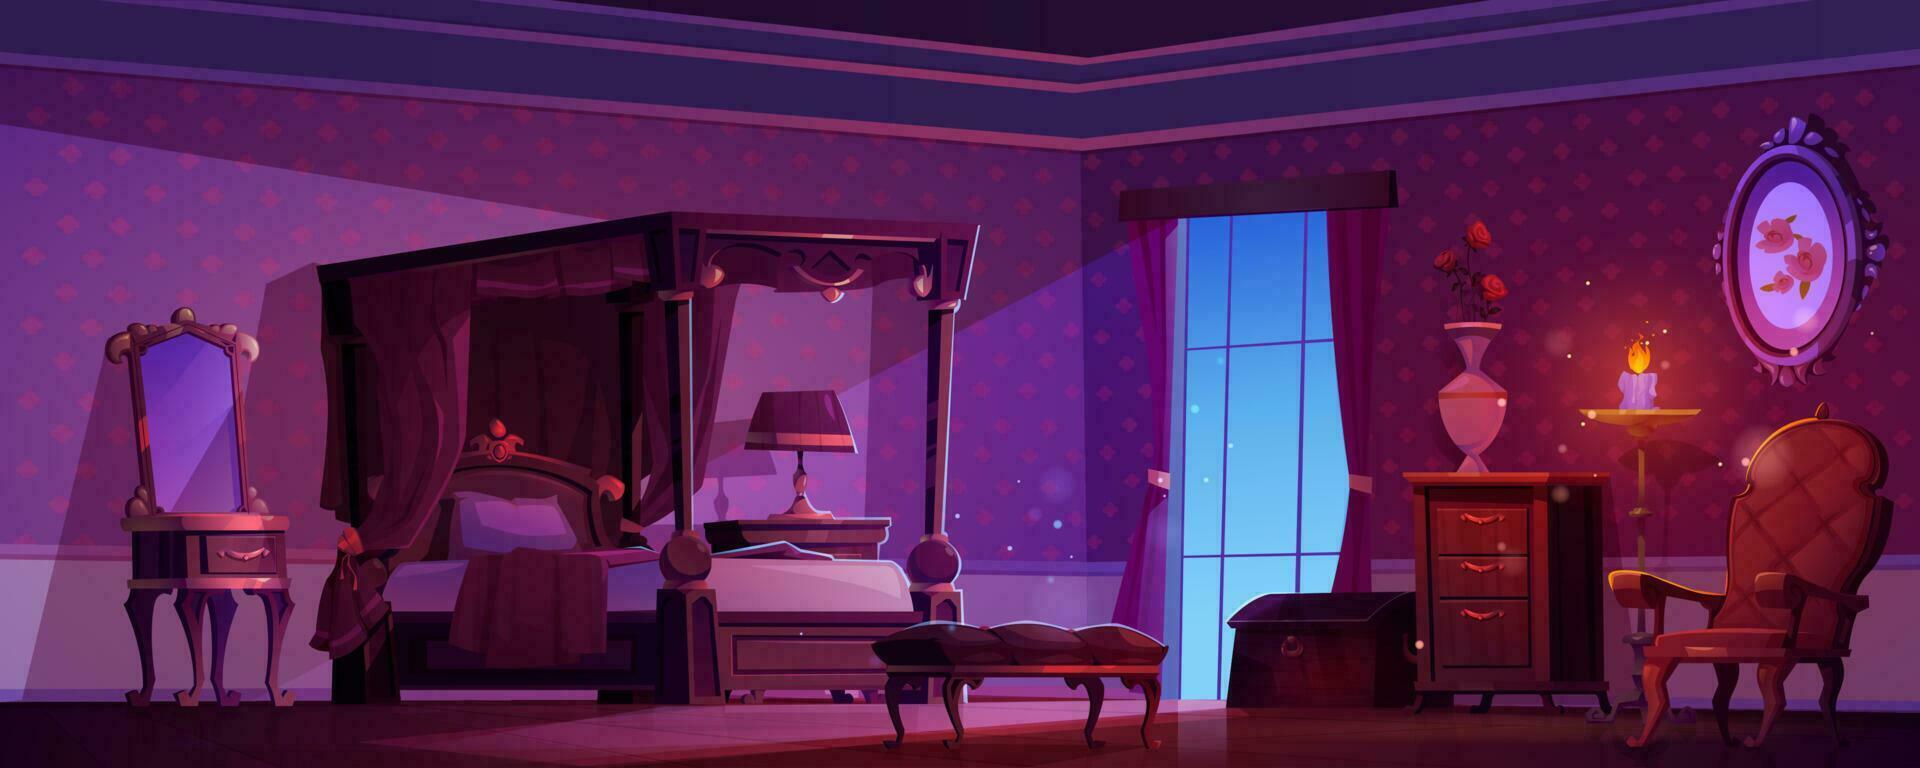 Victorian night bedroom interior, royal furniture vector